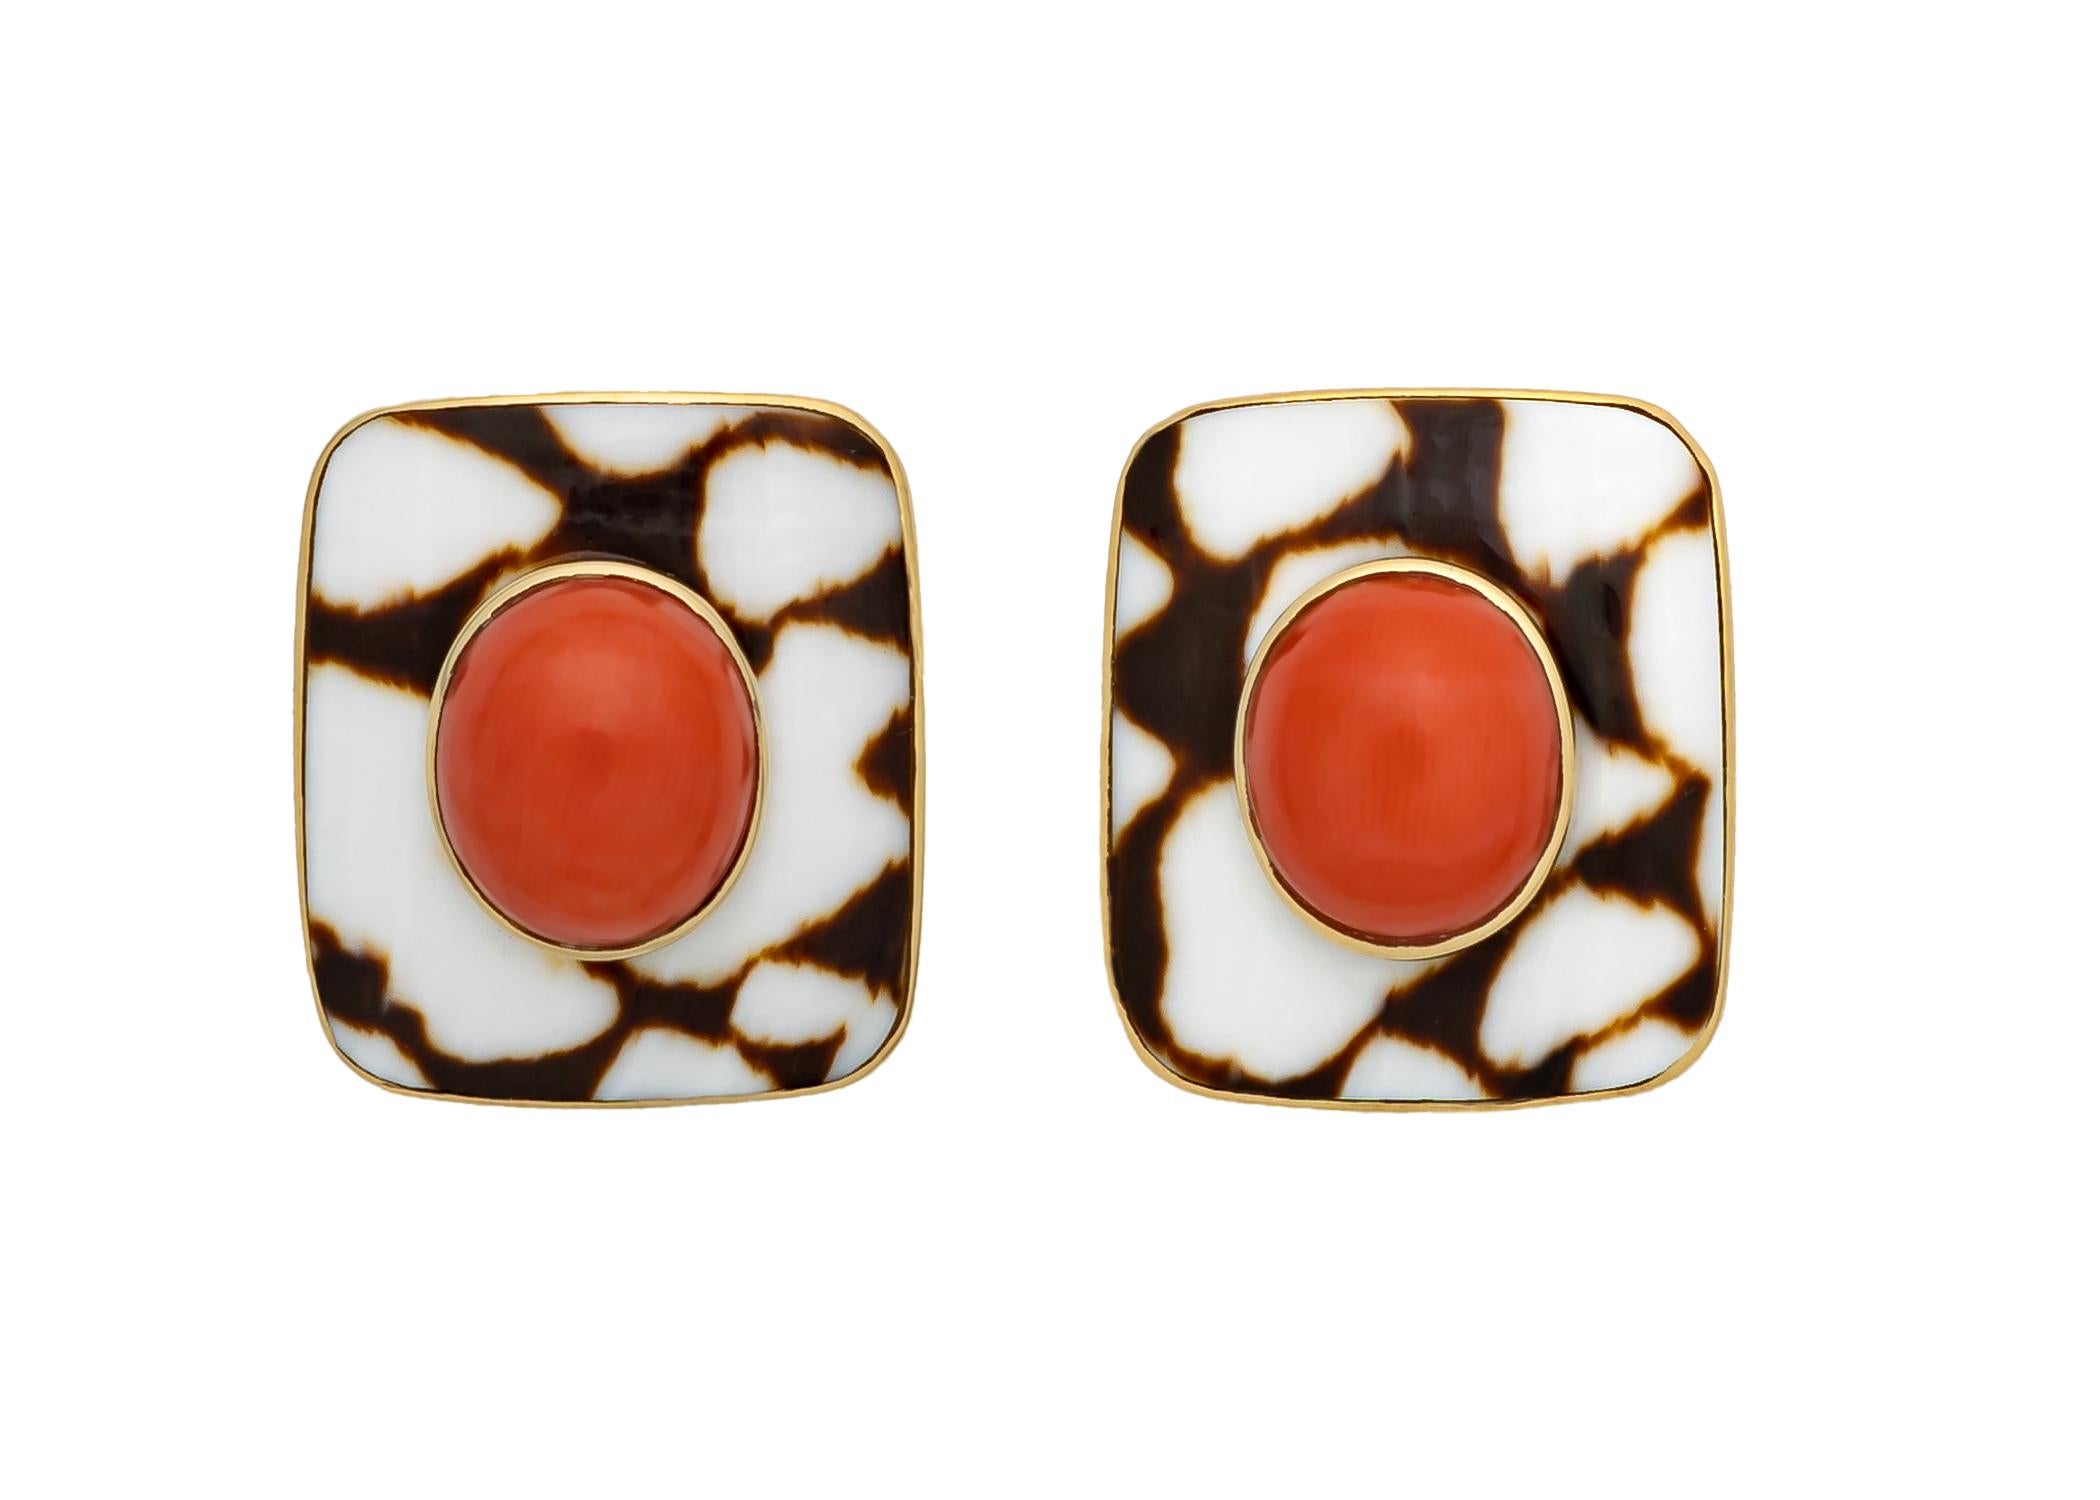 coral shell earrings